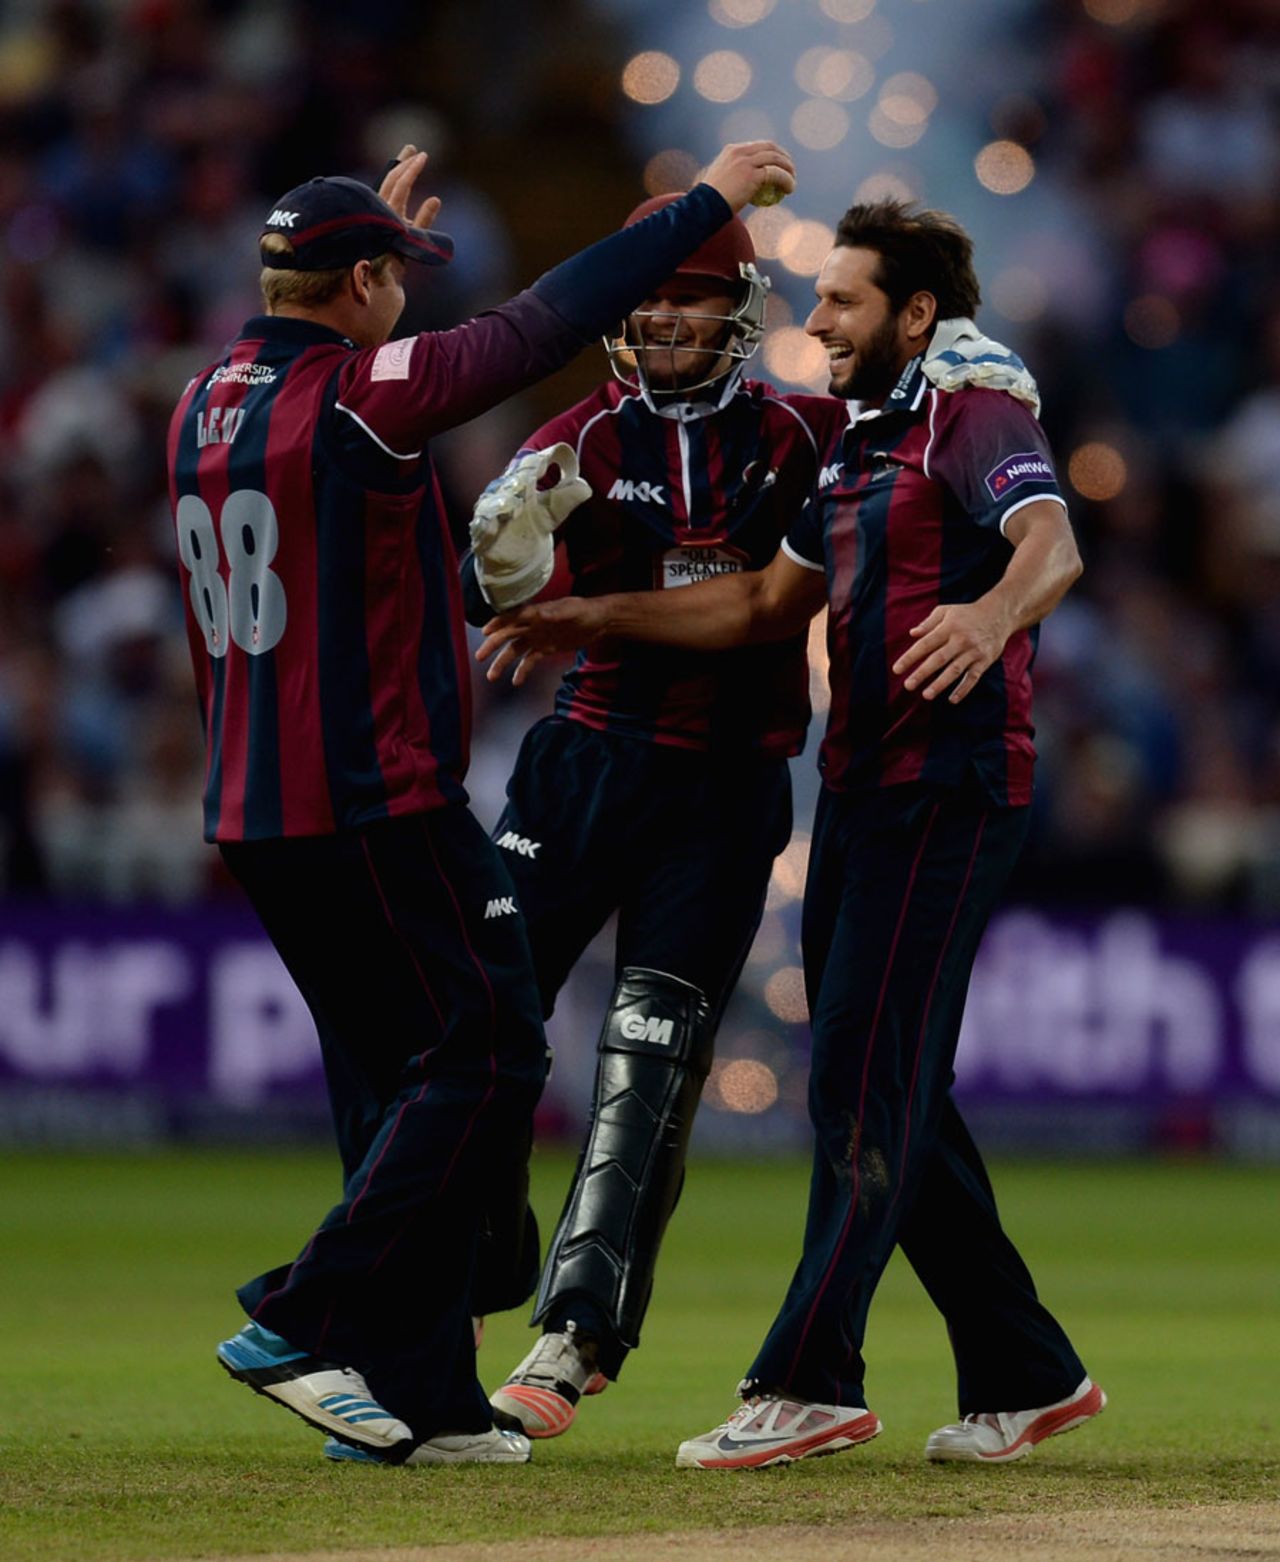 Shahid Afridi celebrates the wicket of James Faulkner, Northamptonshire v Lancashire, NatWest T20 Blast, Final, Edgbaston, August 29, 2015 